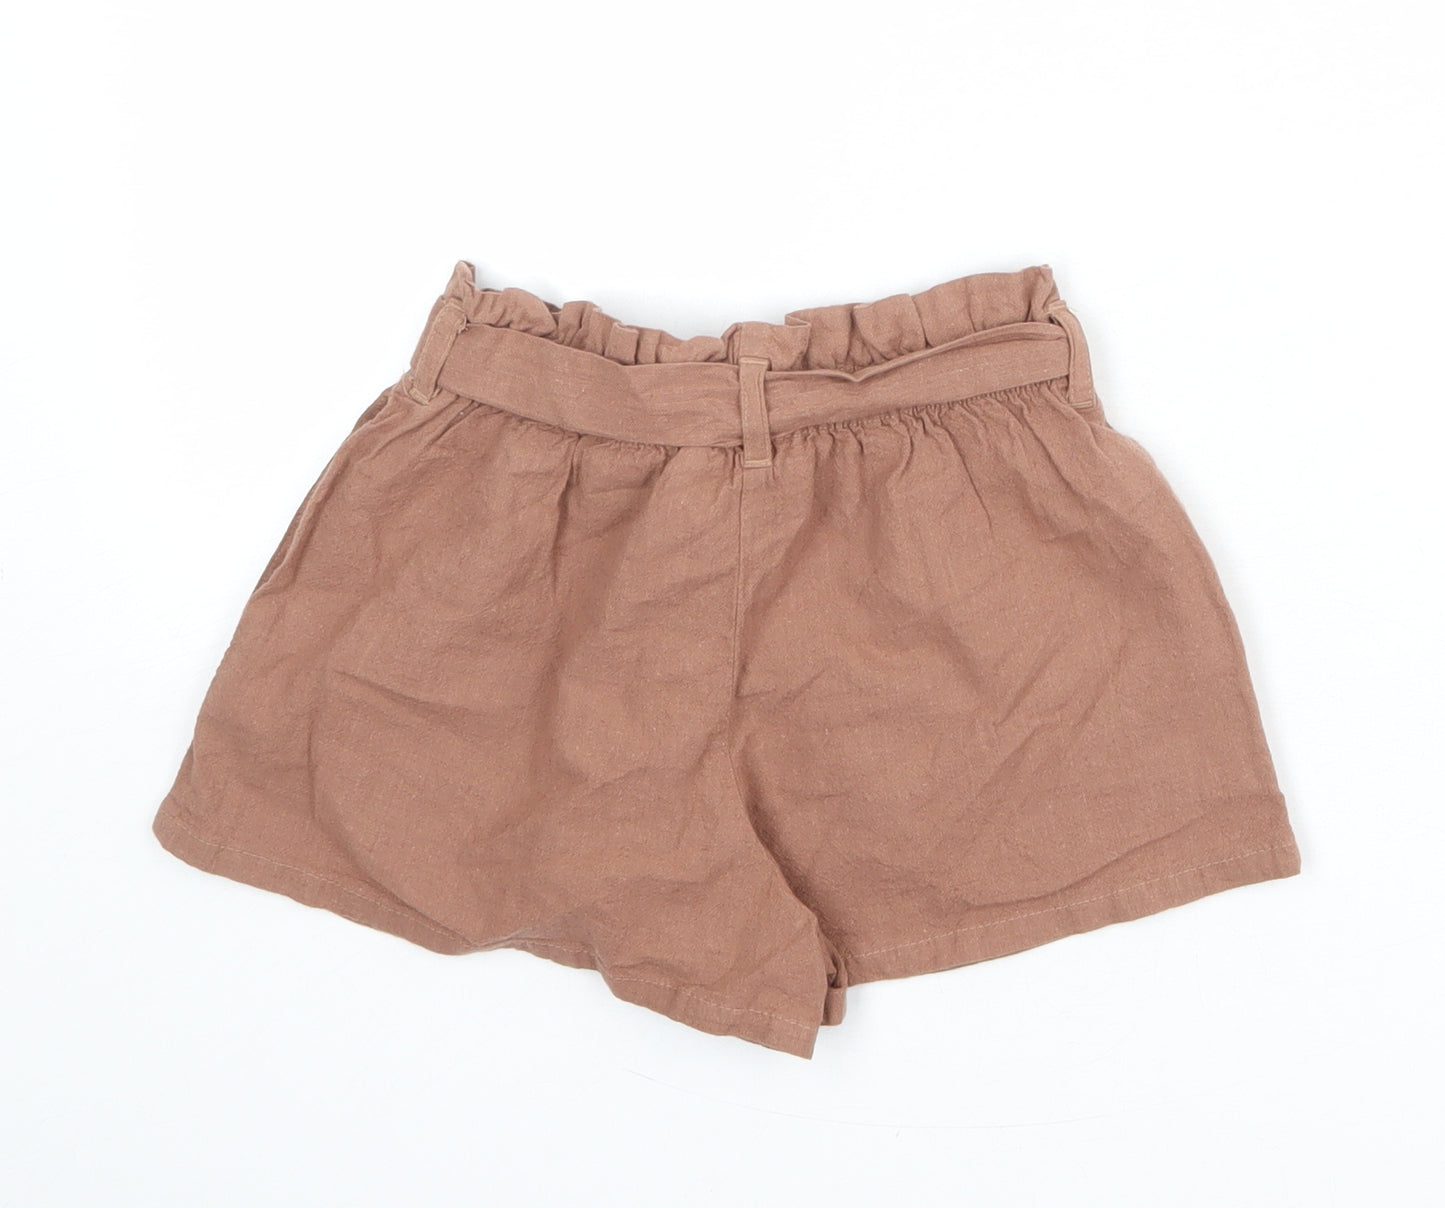 H&M Girls Brown Cotton Chino Shorts Size 4-5 Years Regular